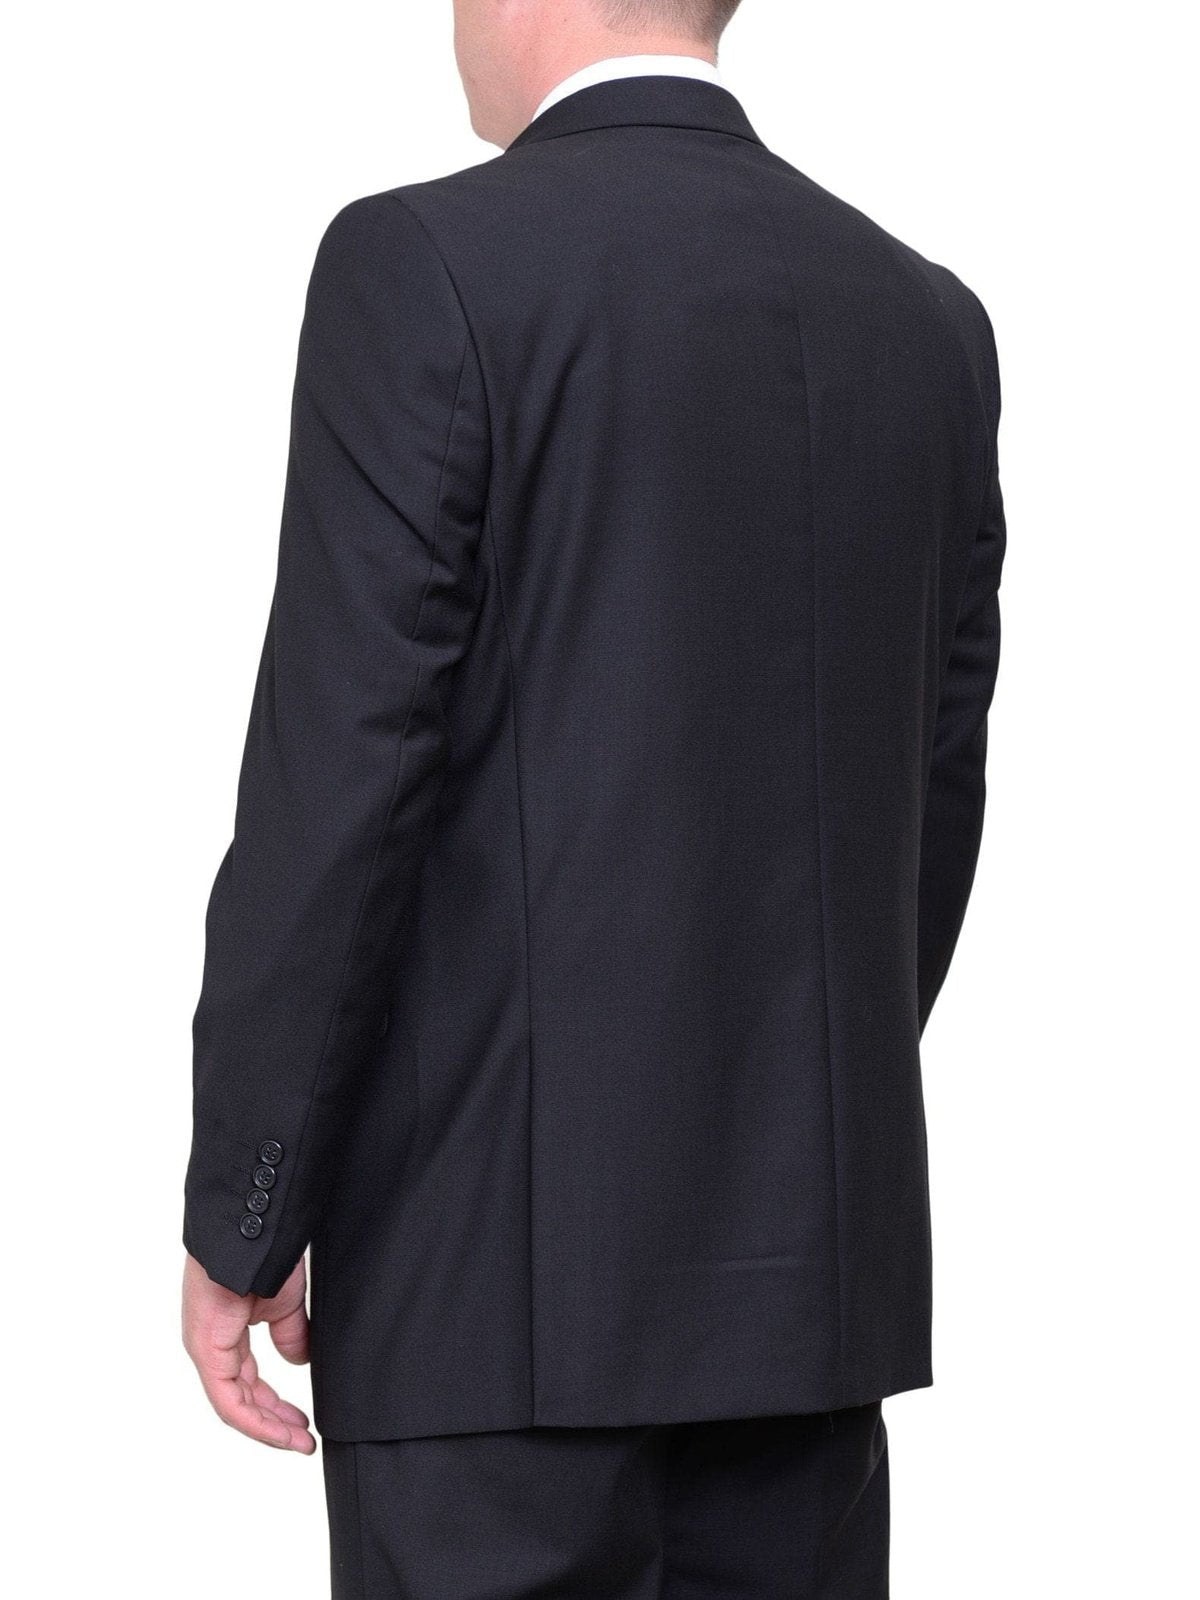 back view of black slim fit two button men's blazer